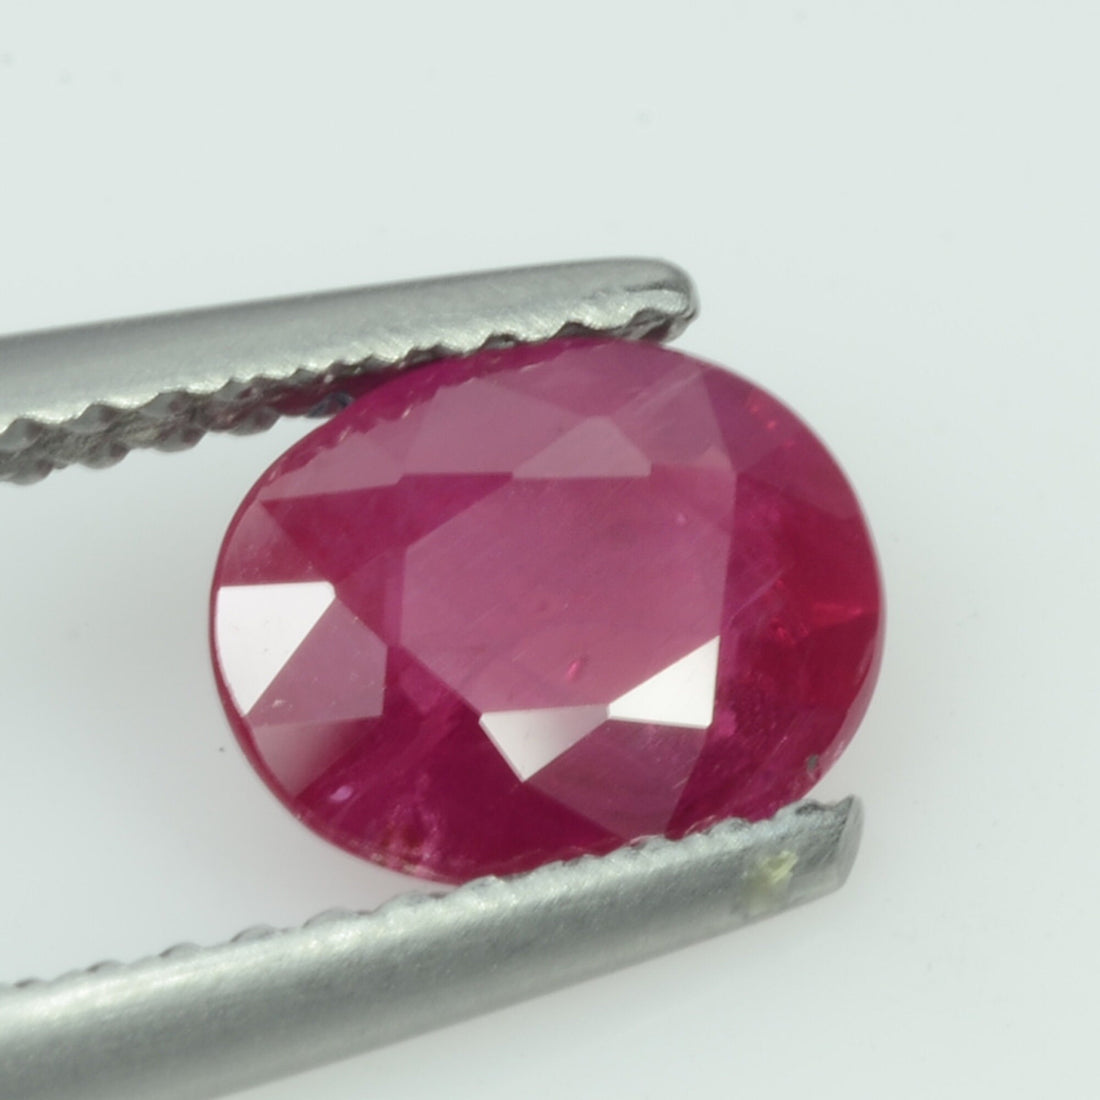 1.24 cts Natural Burma Ruby Loose Gemstone Oval Cut